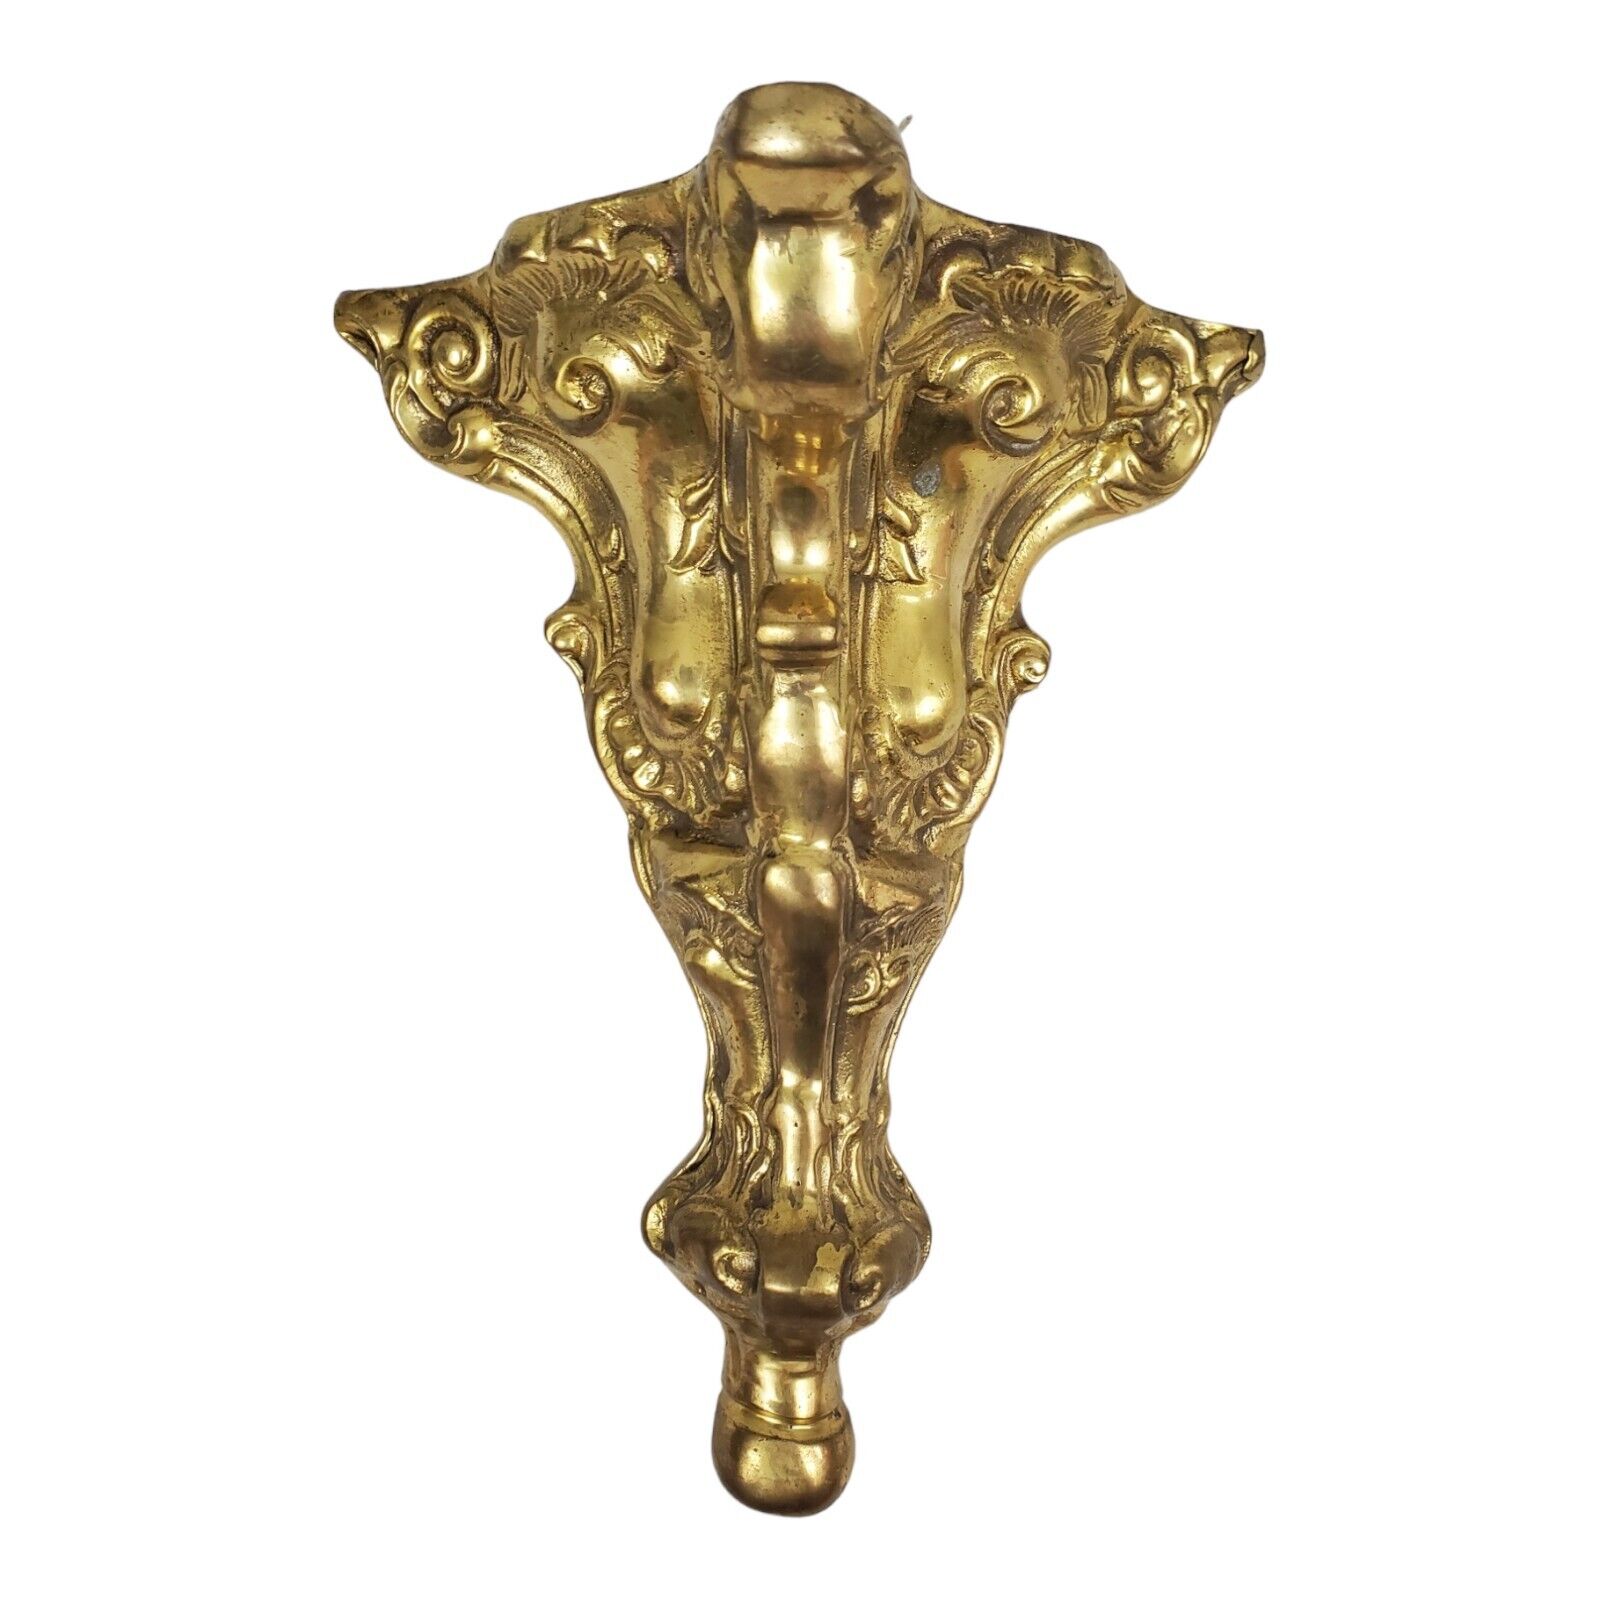 Vintage Art Nouveau Sconce Wall Pocket Planter Rococo Baroque Solid Brass